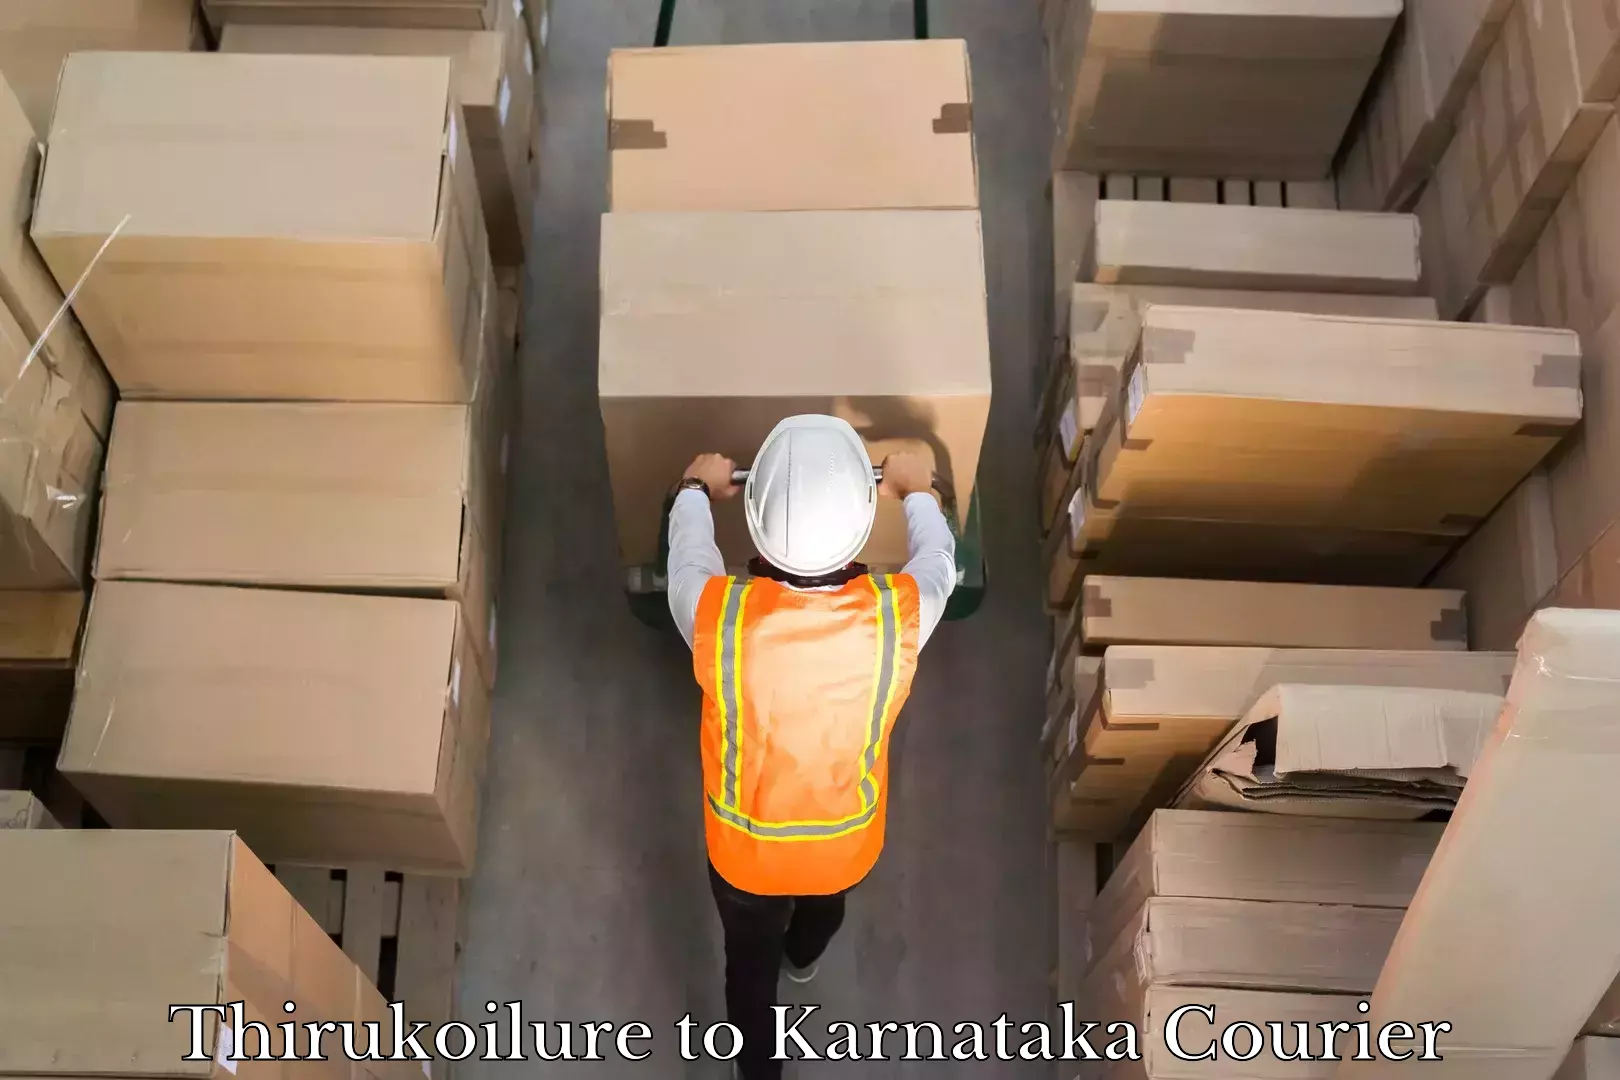 Large package courier Thirukoilure to Karnataka